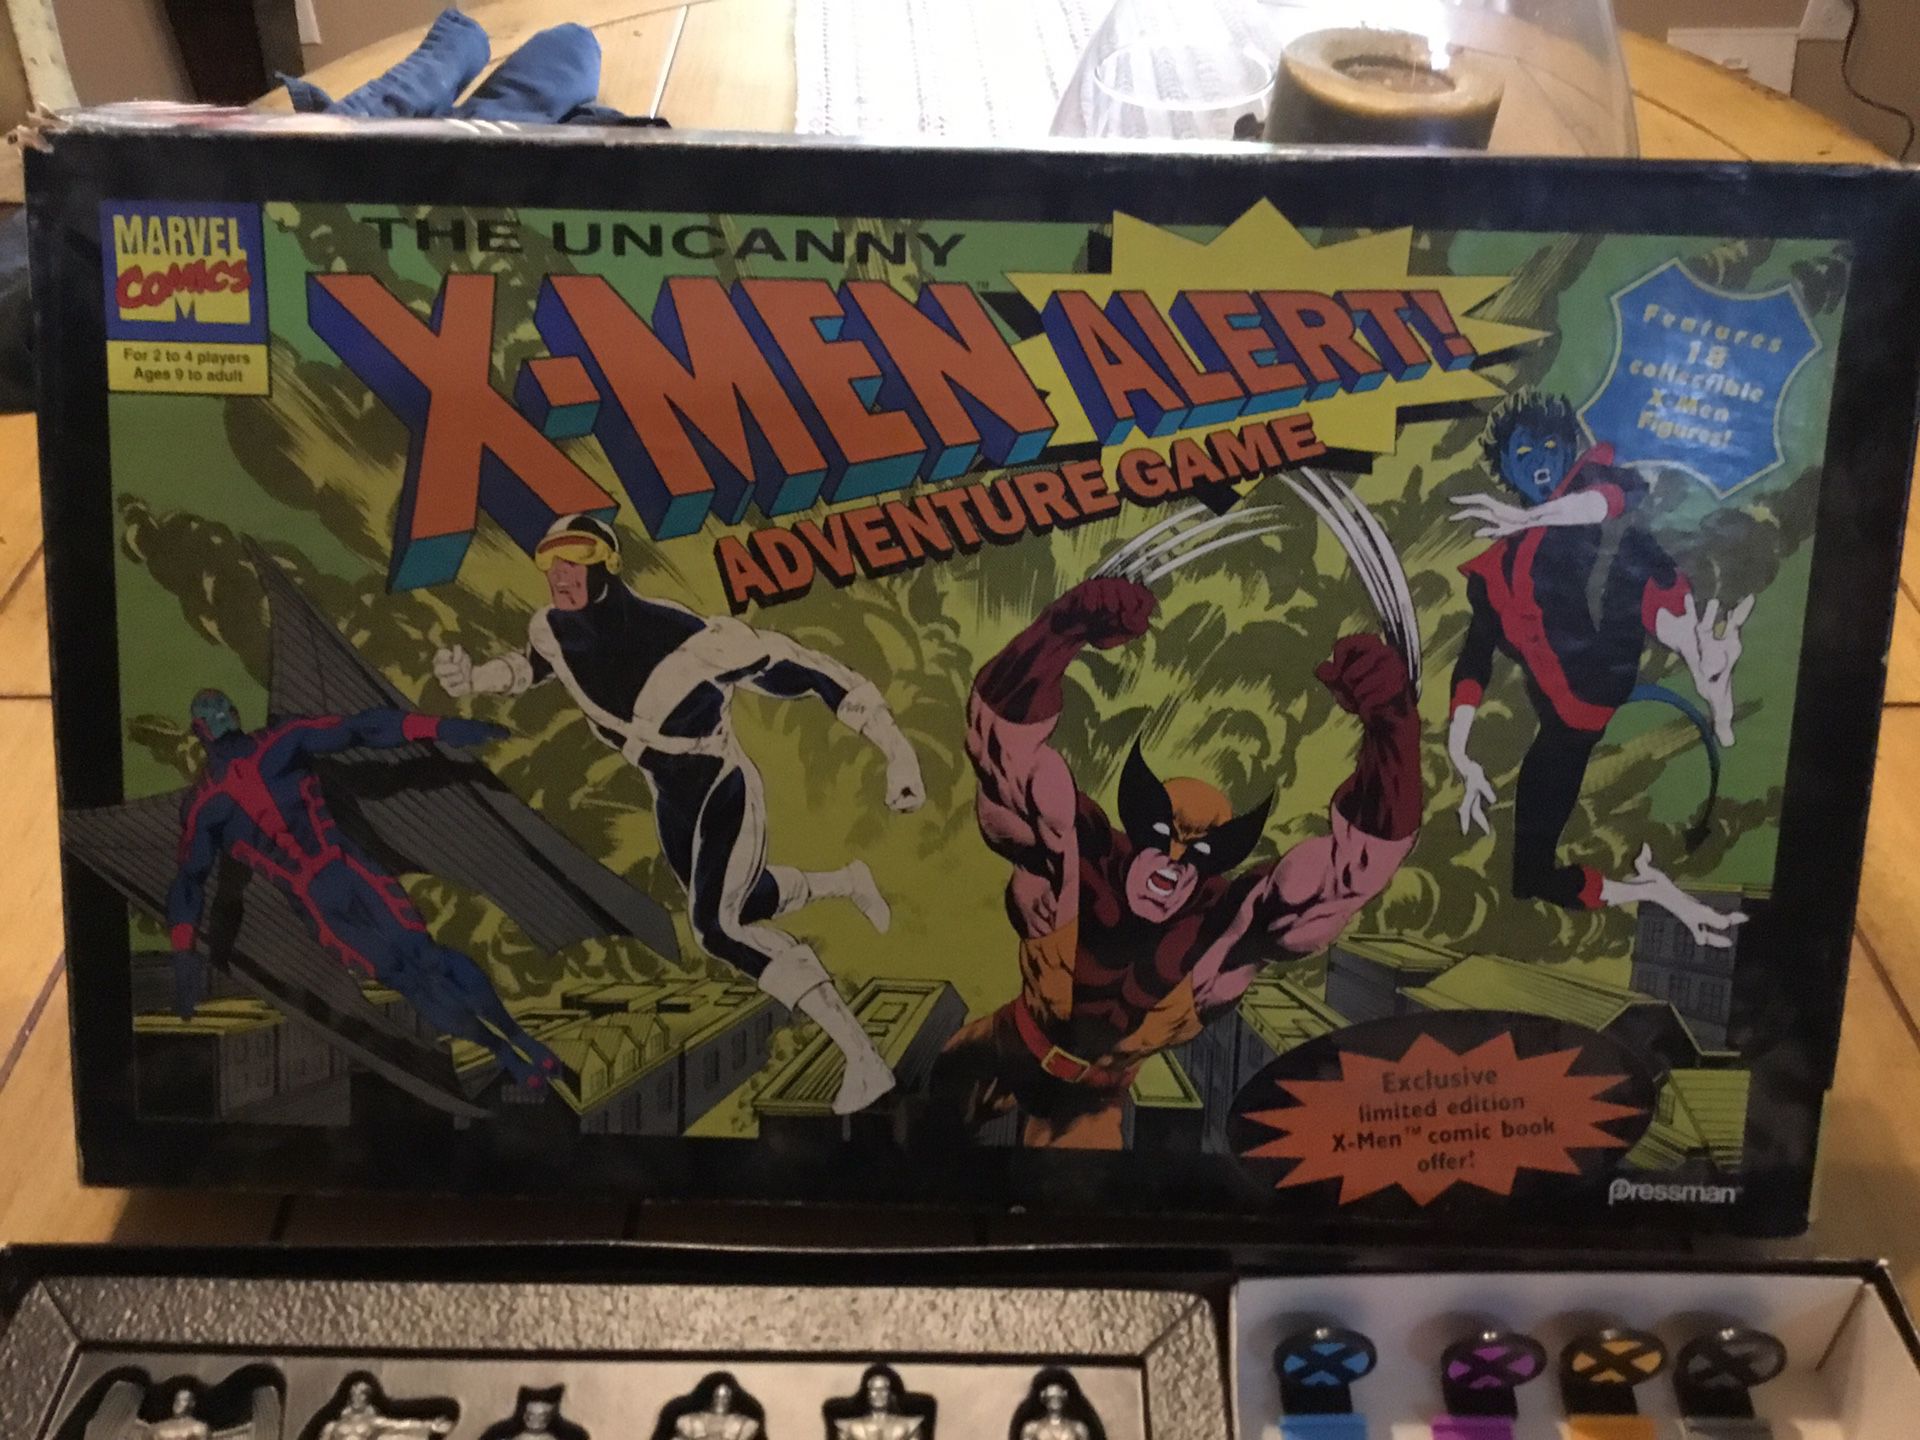 The Uncanny X-Men Alert! Adventure Board Game!